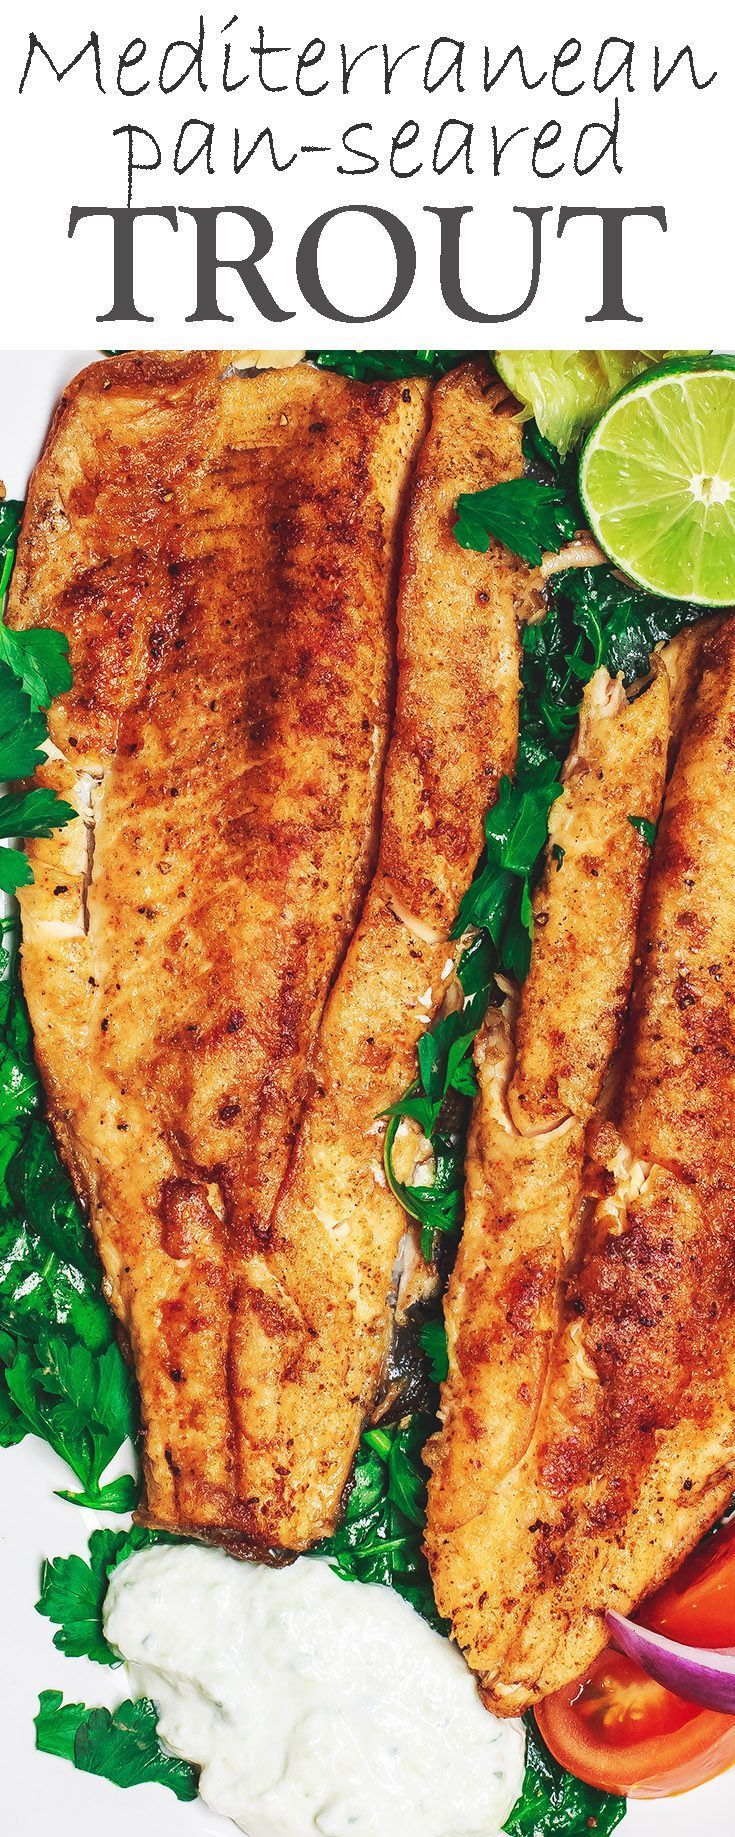 24 fish recipes trout
 ideas